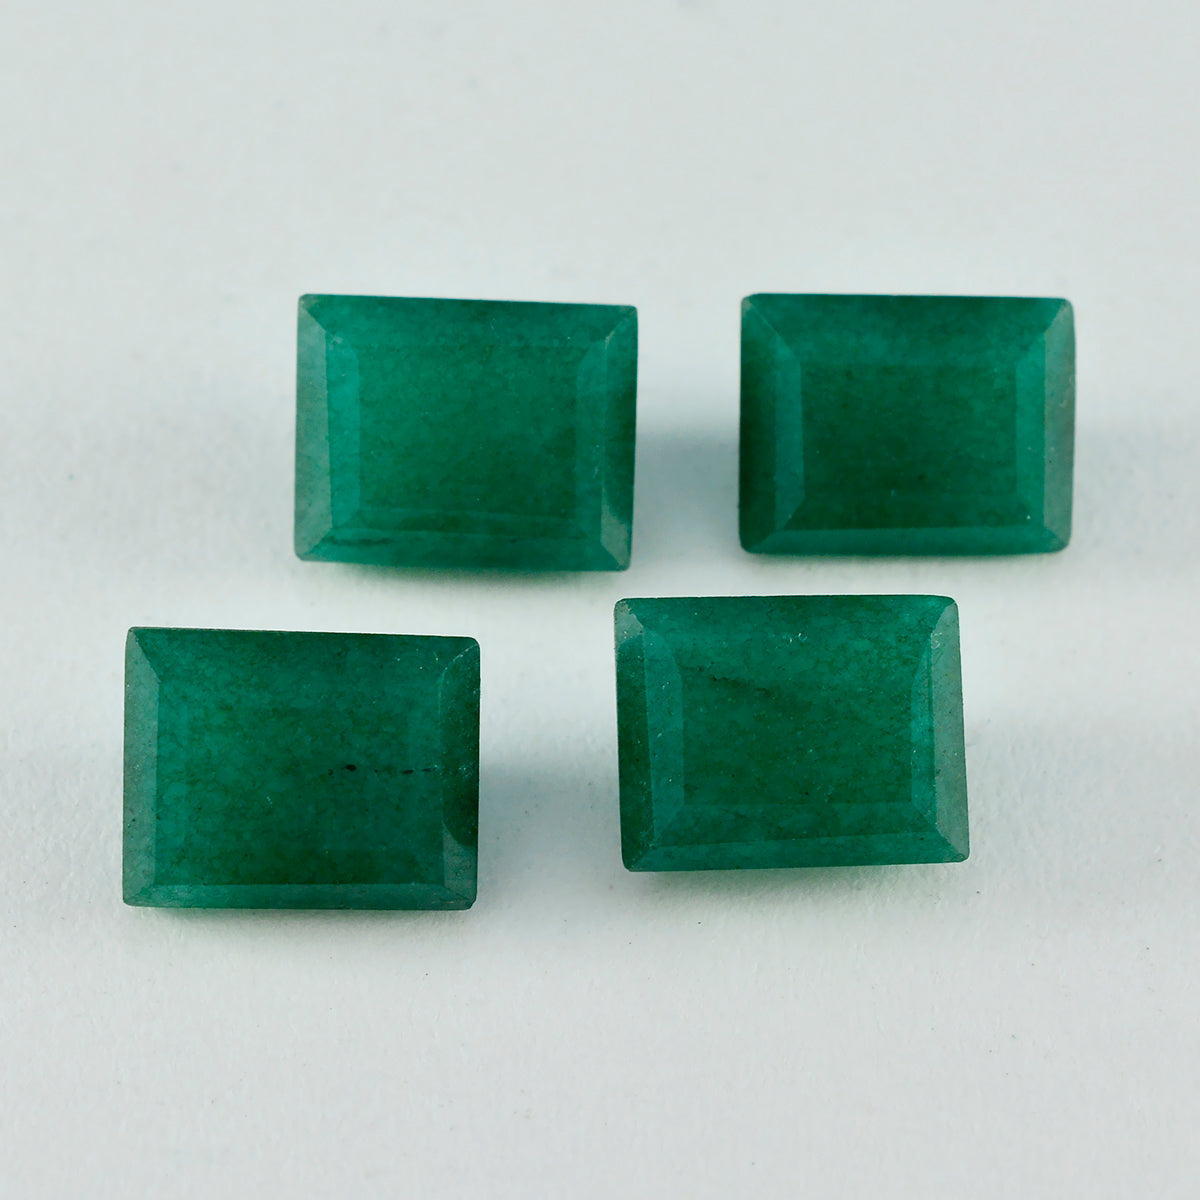 riyogems 1шт натуральная зеленая яшма граненая 12х16 мм восьмиугольная форма драгоценный камень превосходного качества